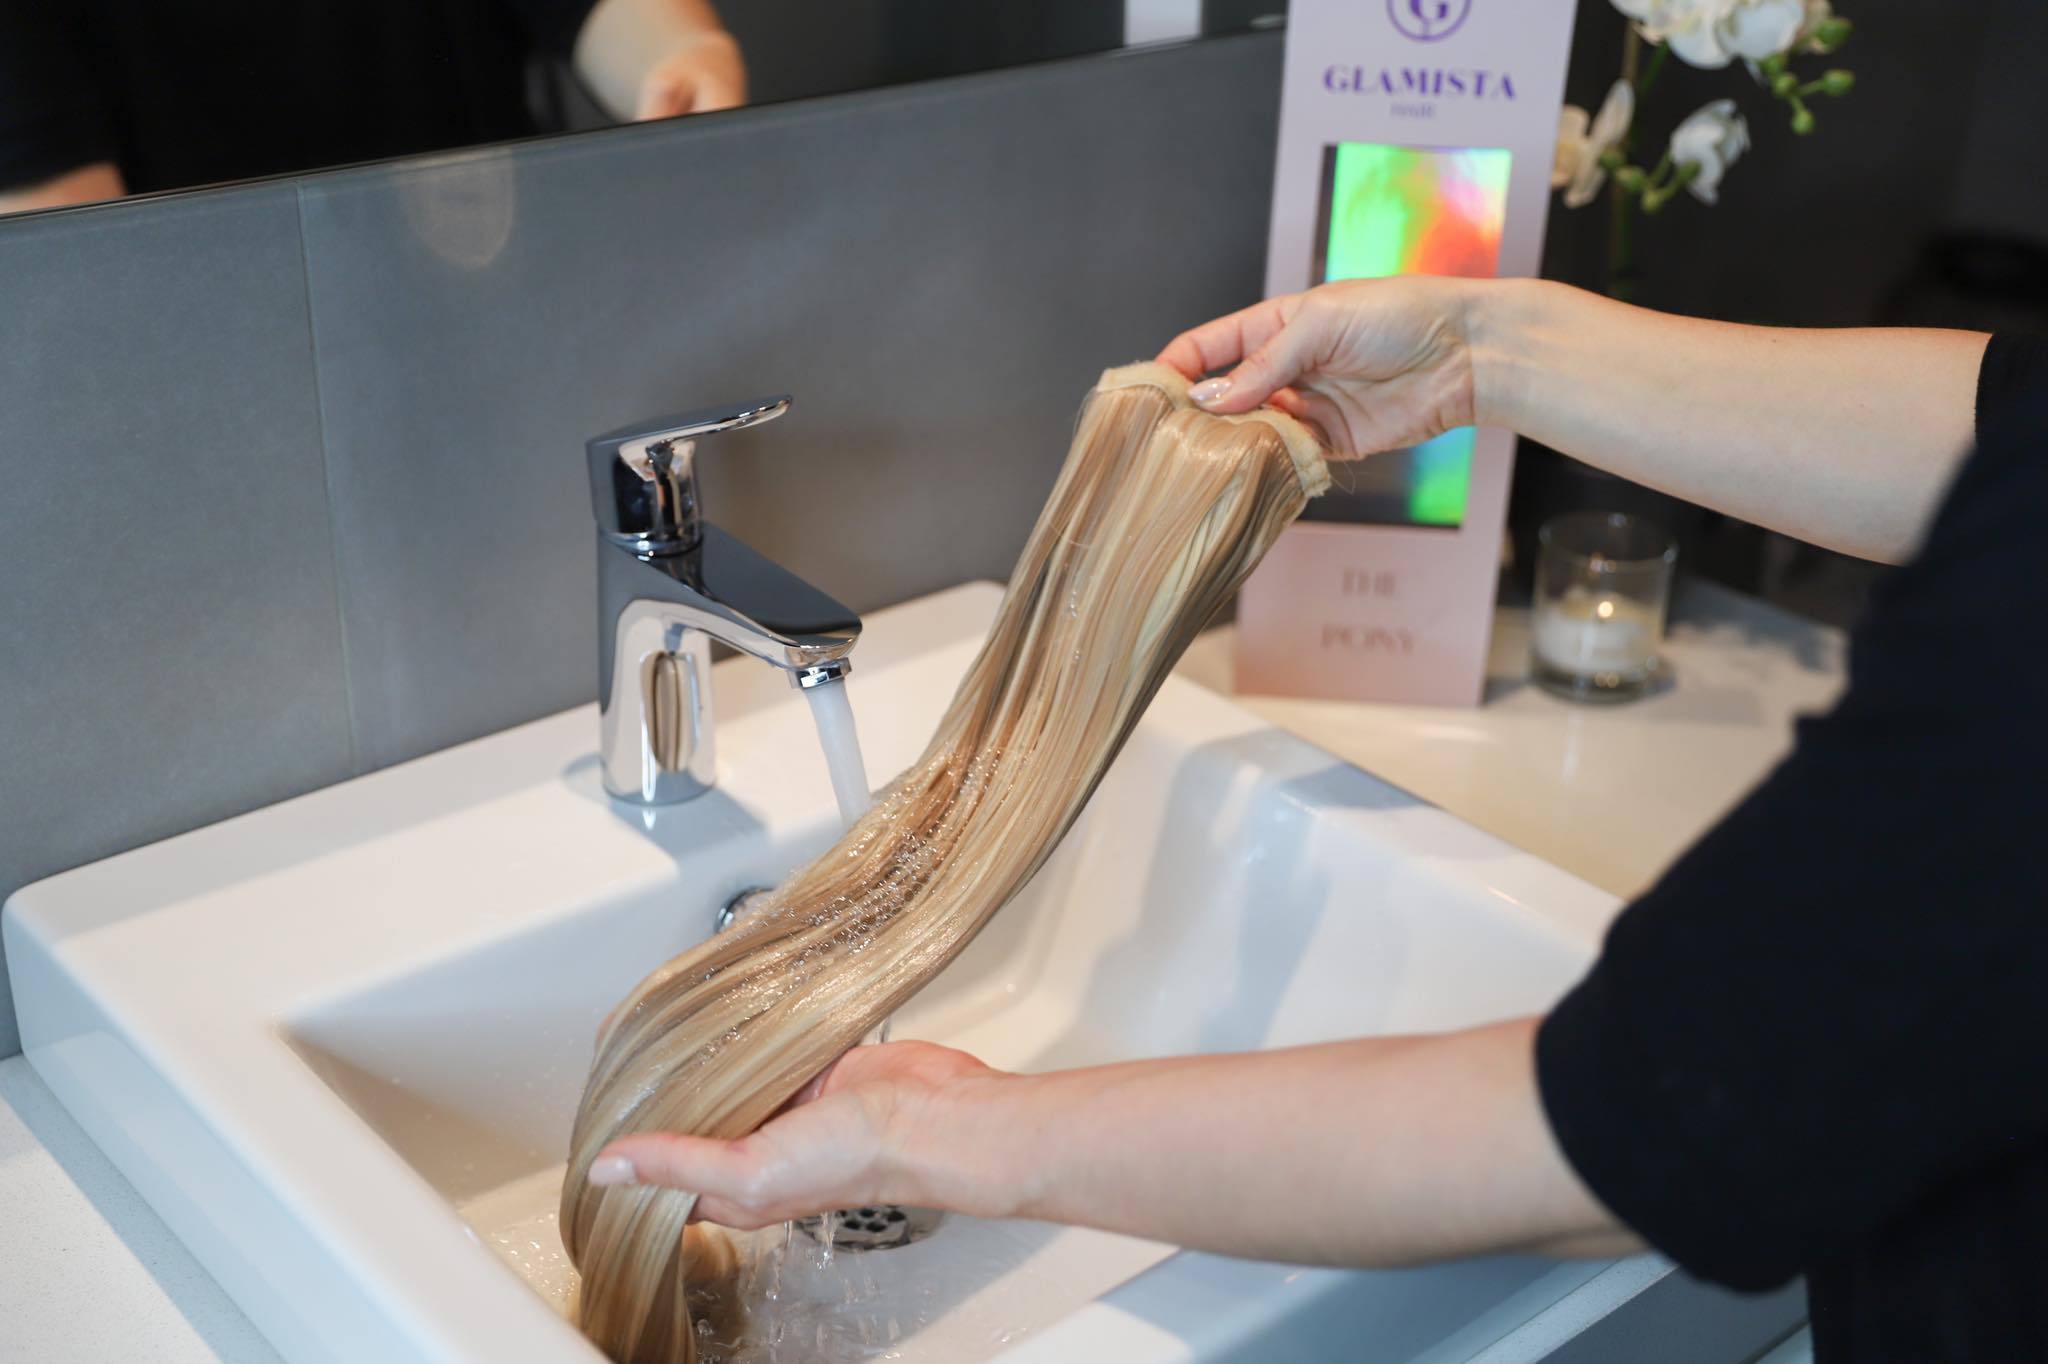 How to wash glamista ponytail